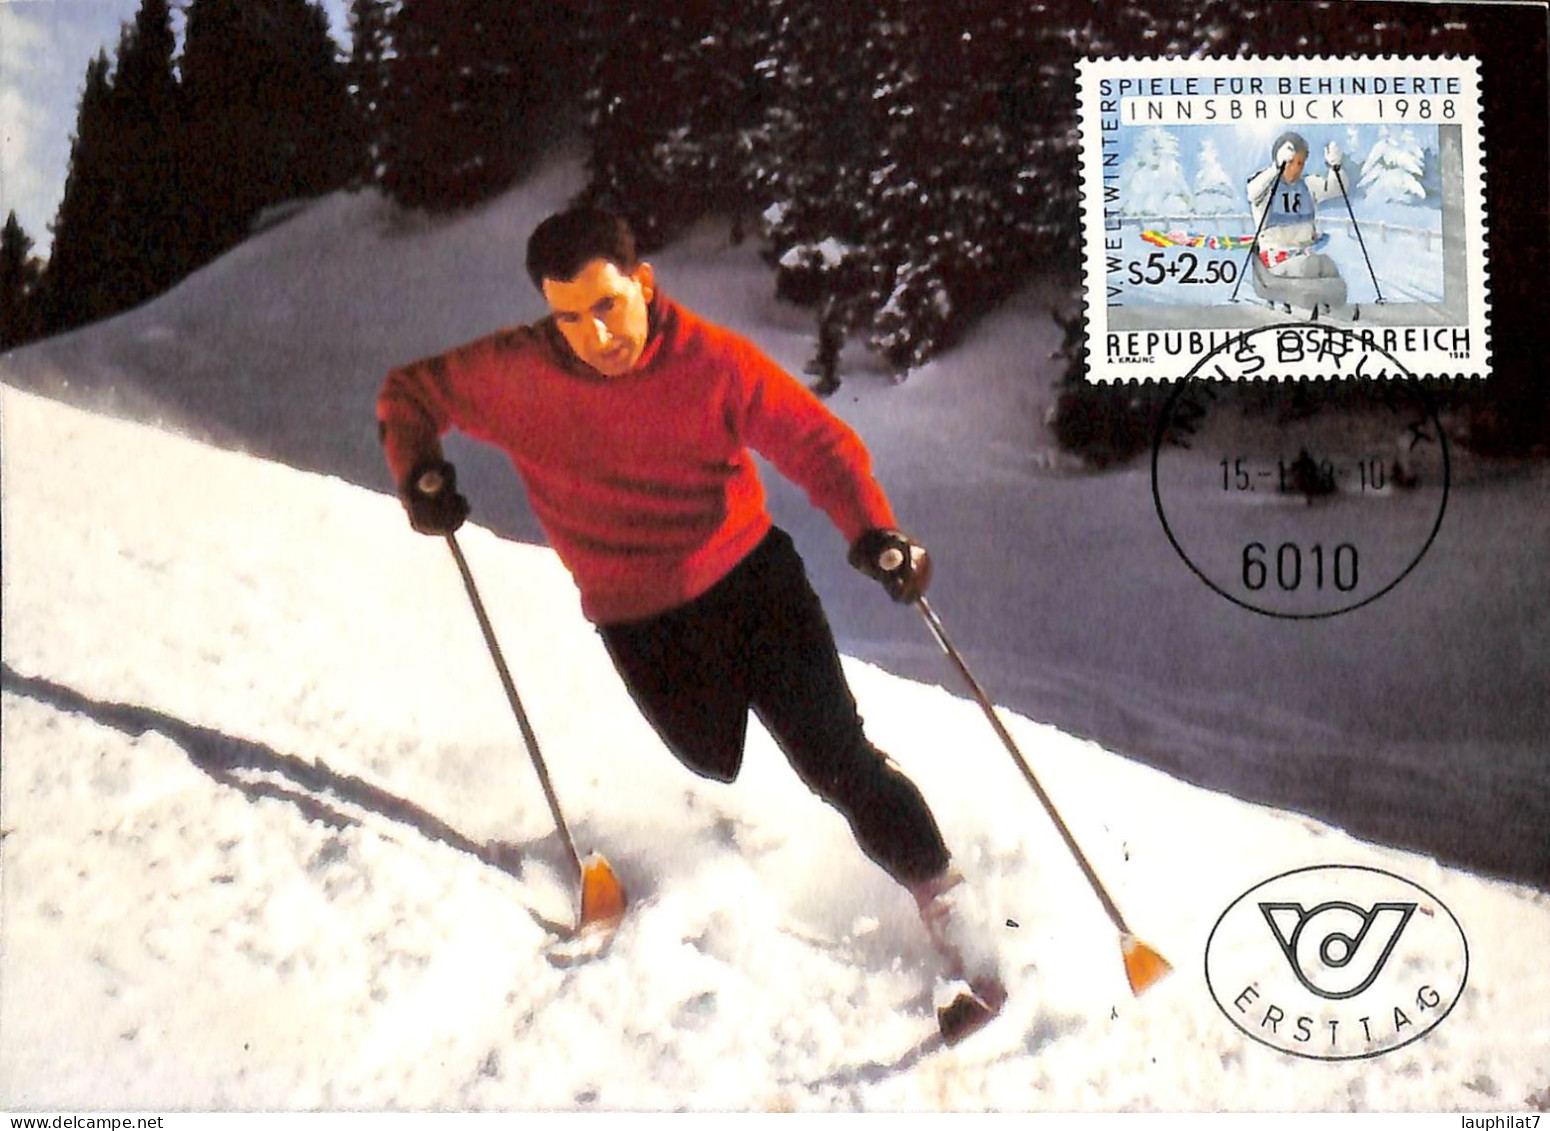 [500013]B/TB//-Autriche 1988 - 6010 INNSBRUCK, Sports, Ski - Cartes-Maximum (CM)